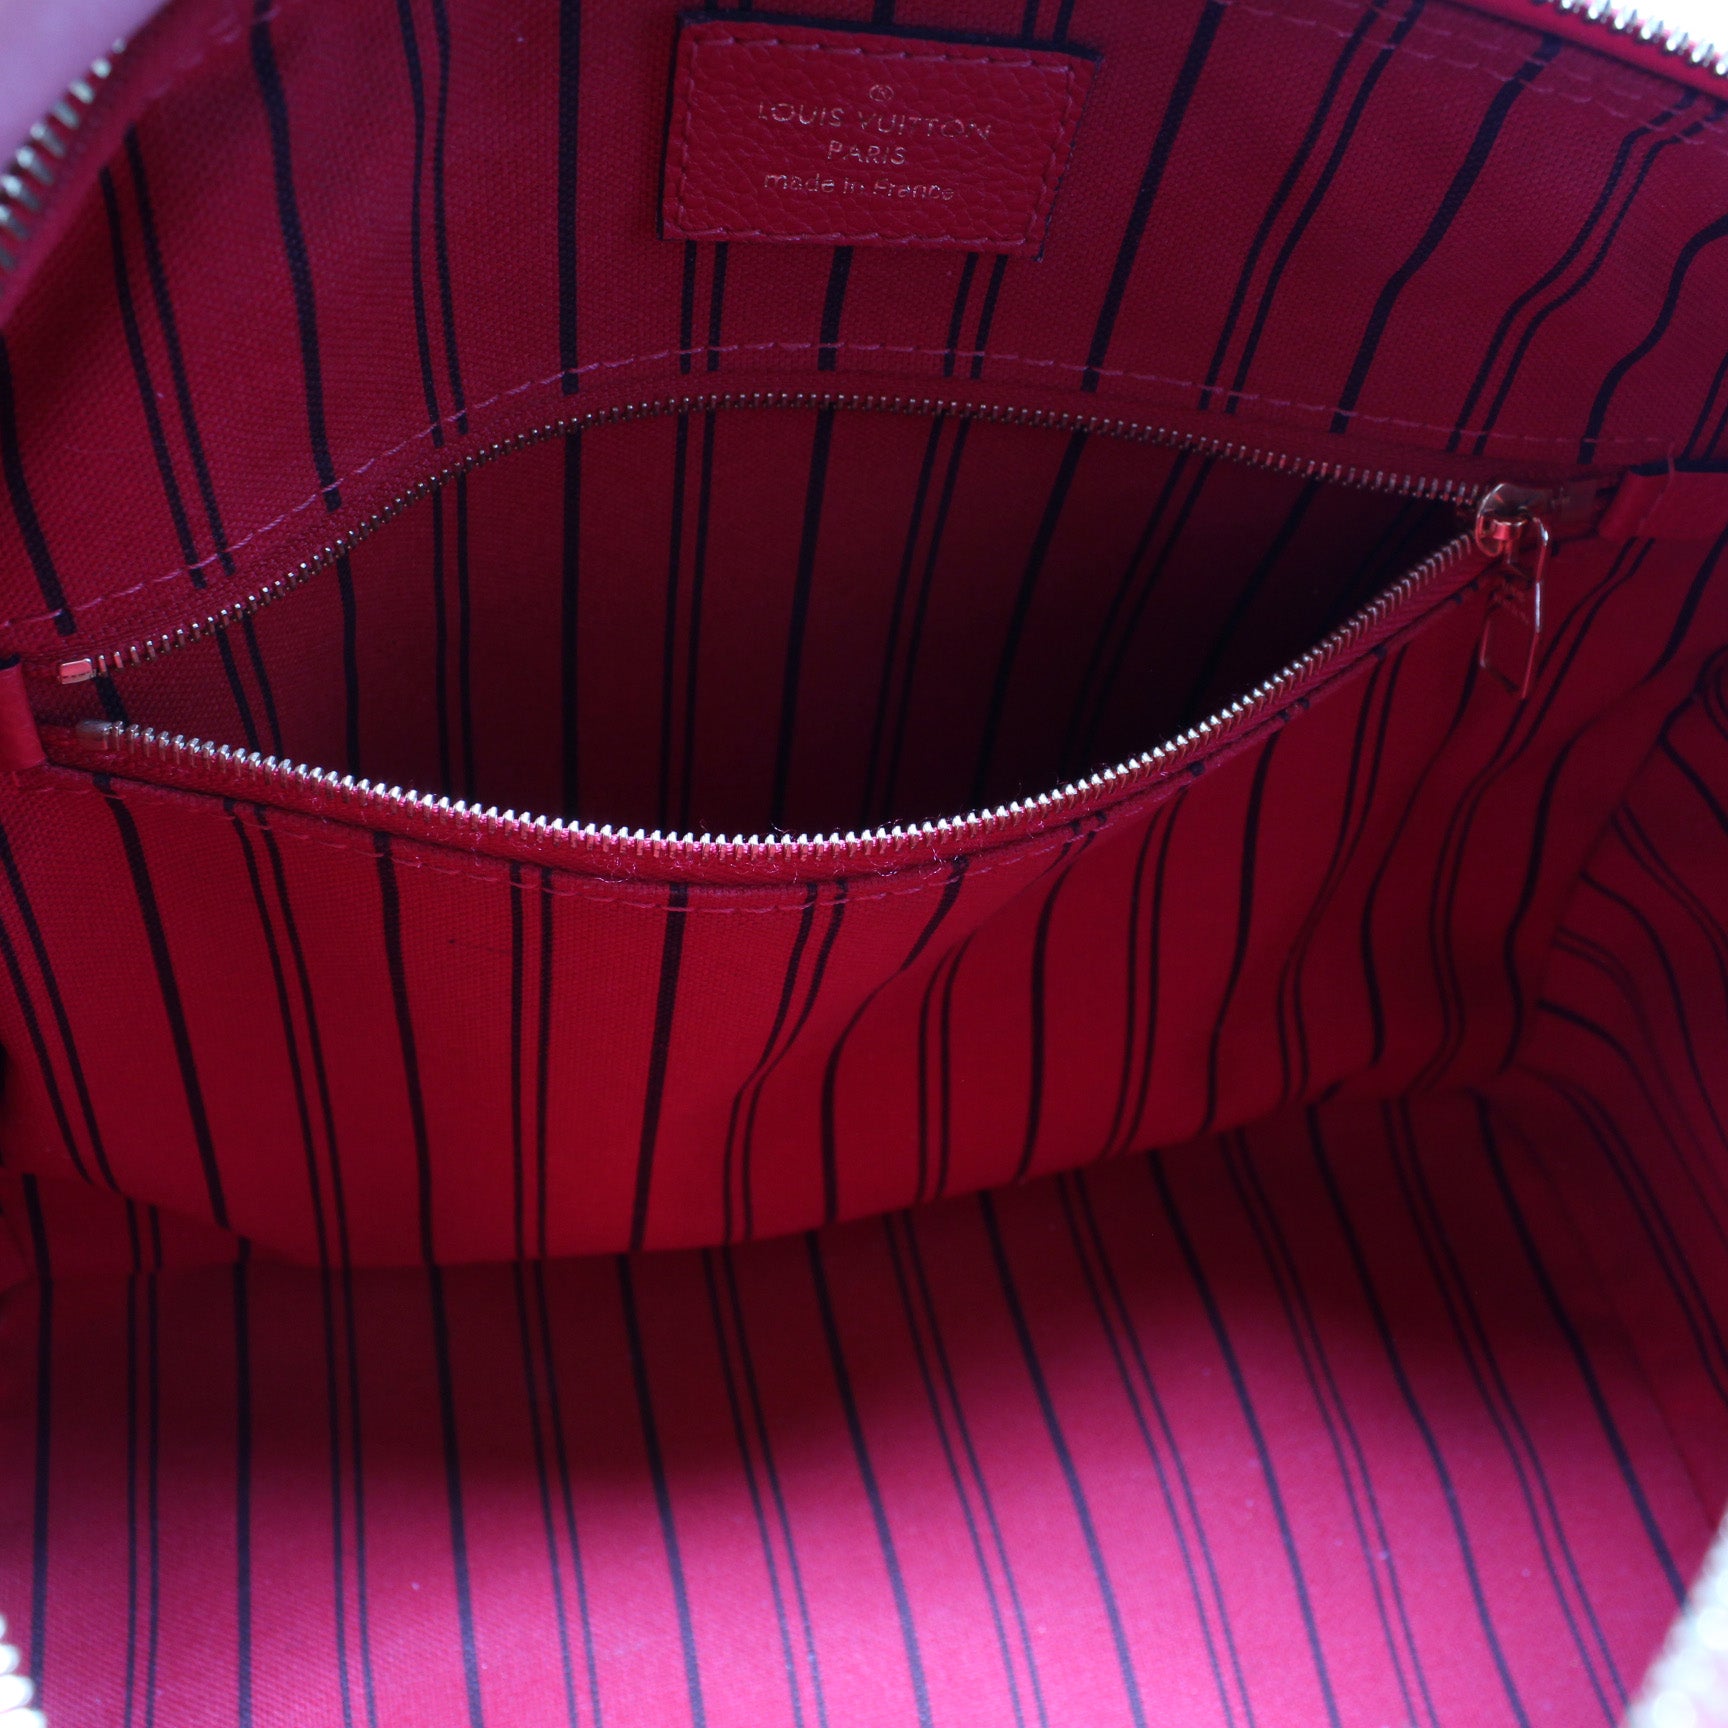 Speedy 25 Bandouliere Empreinte – Keeks Designer Handbags